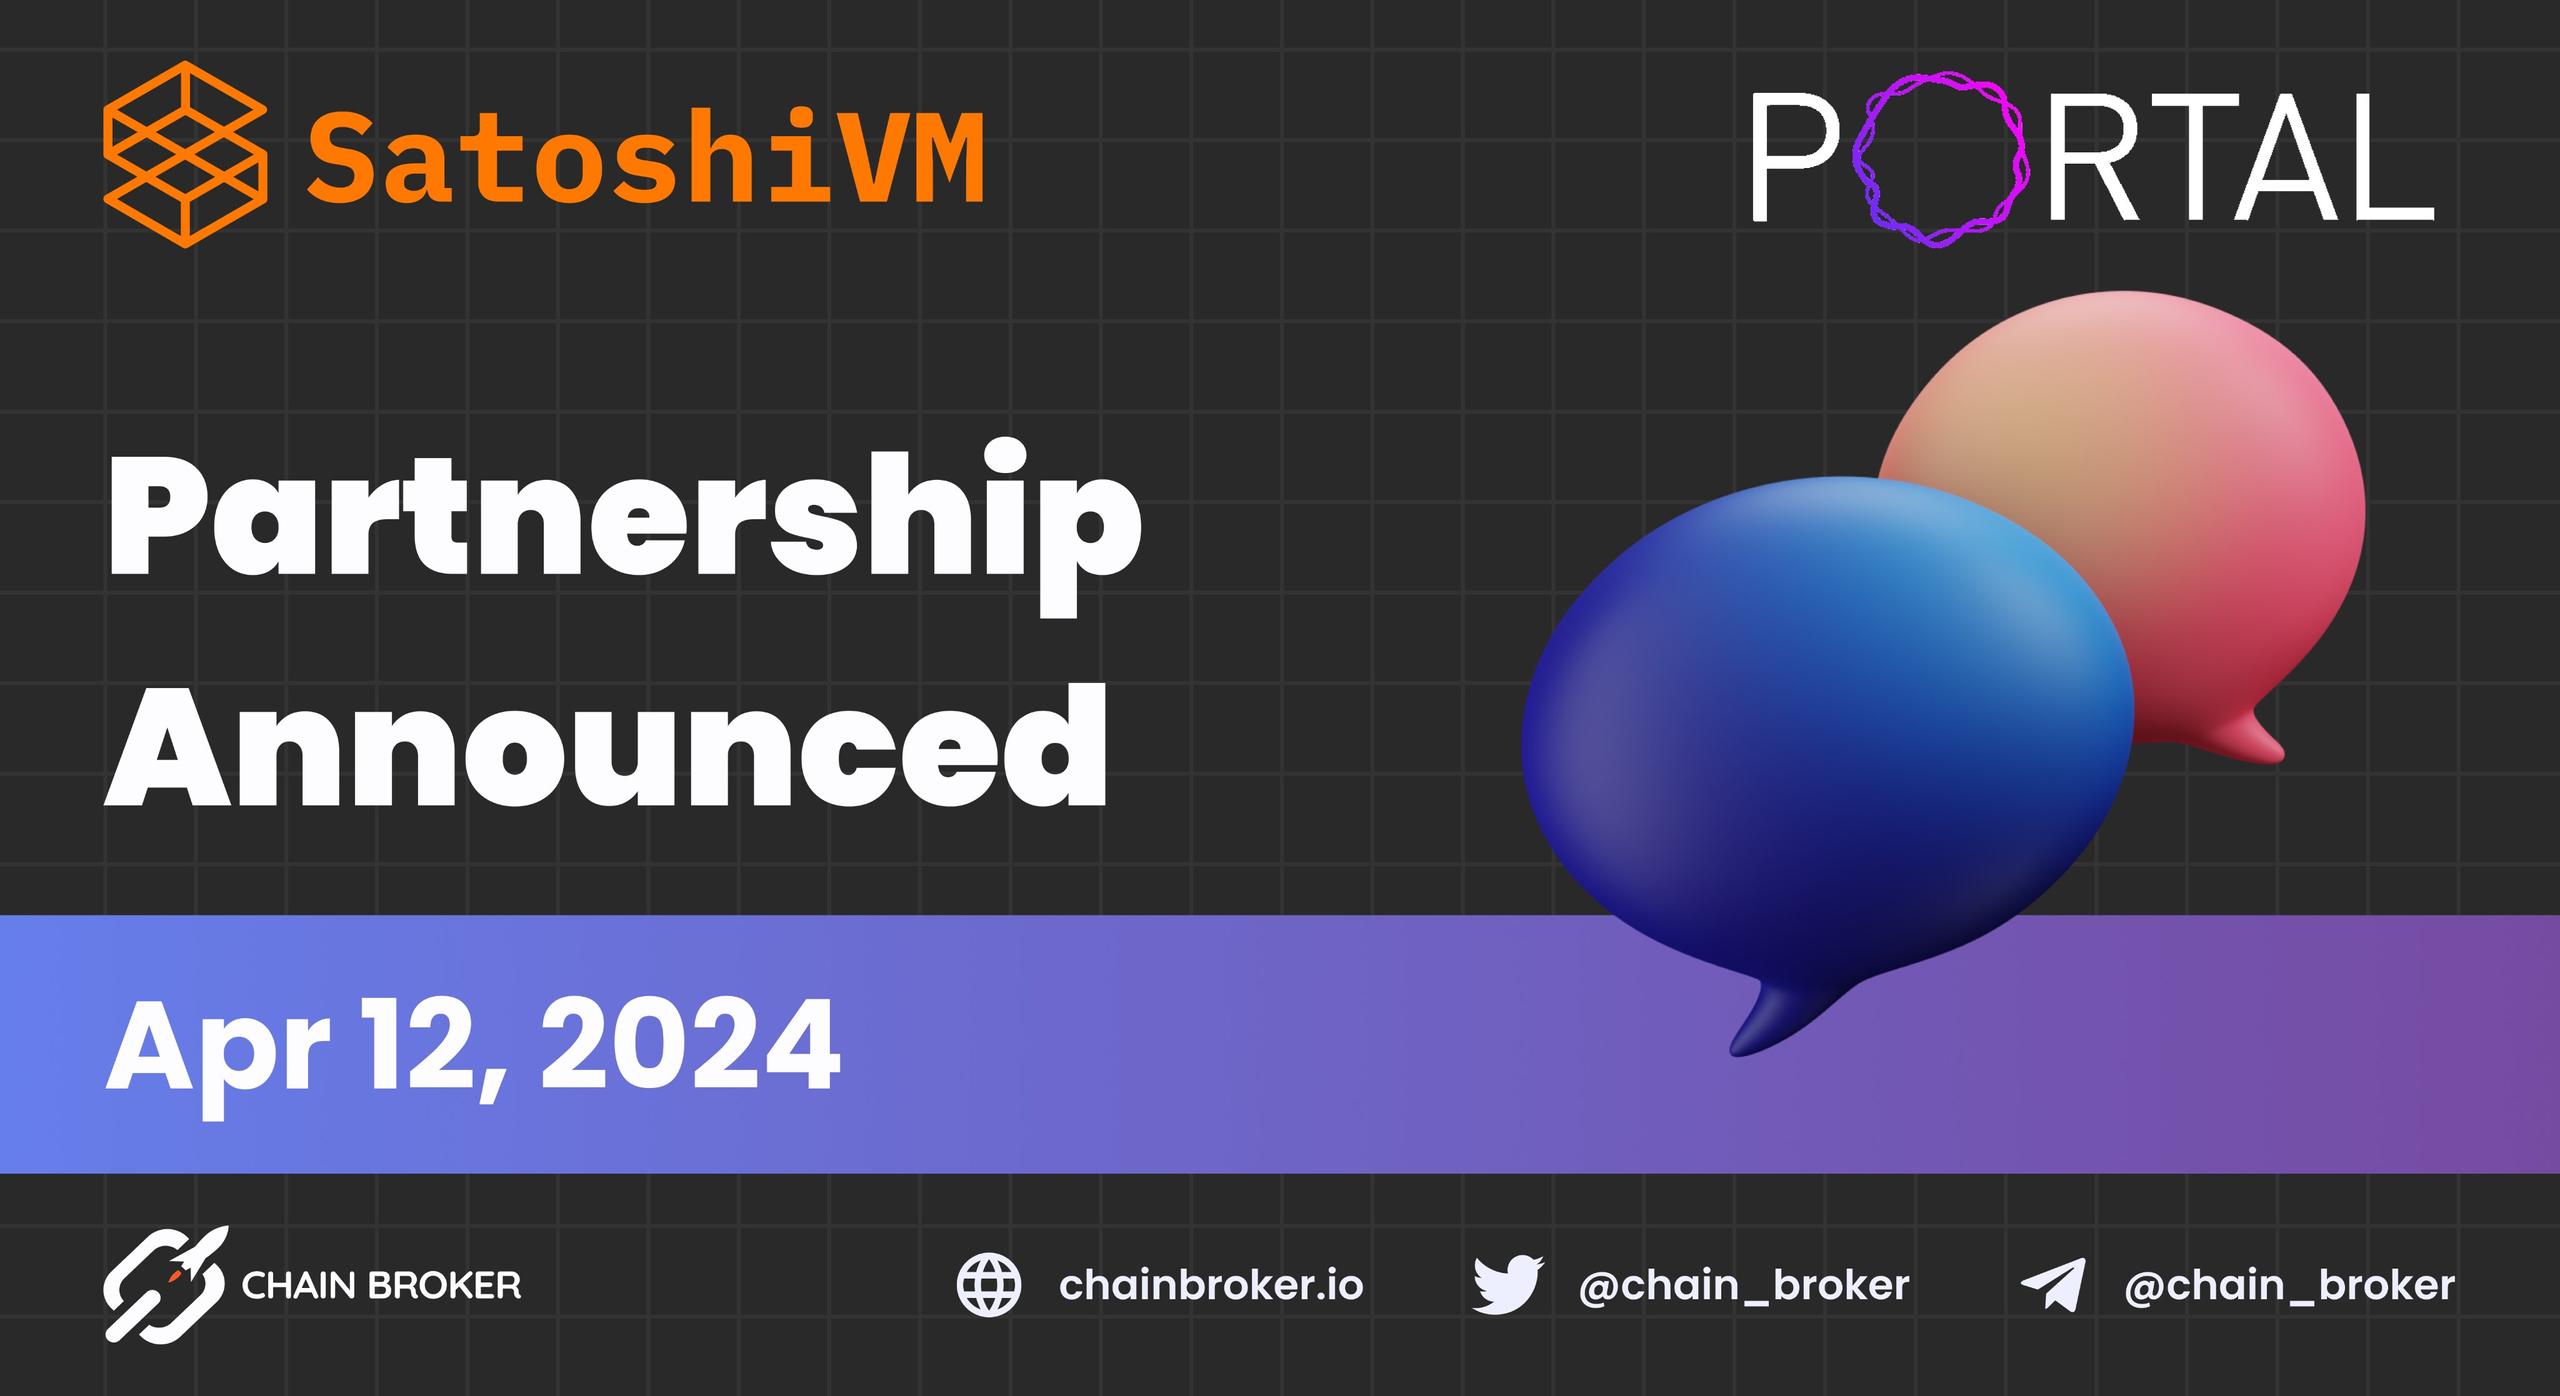 SatoshiVM announces partnership with Portal